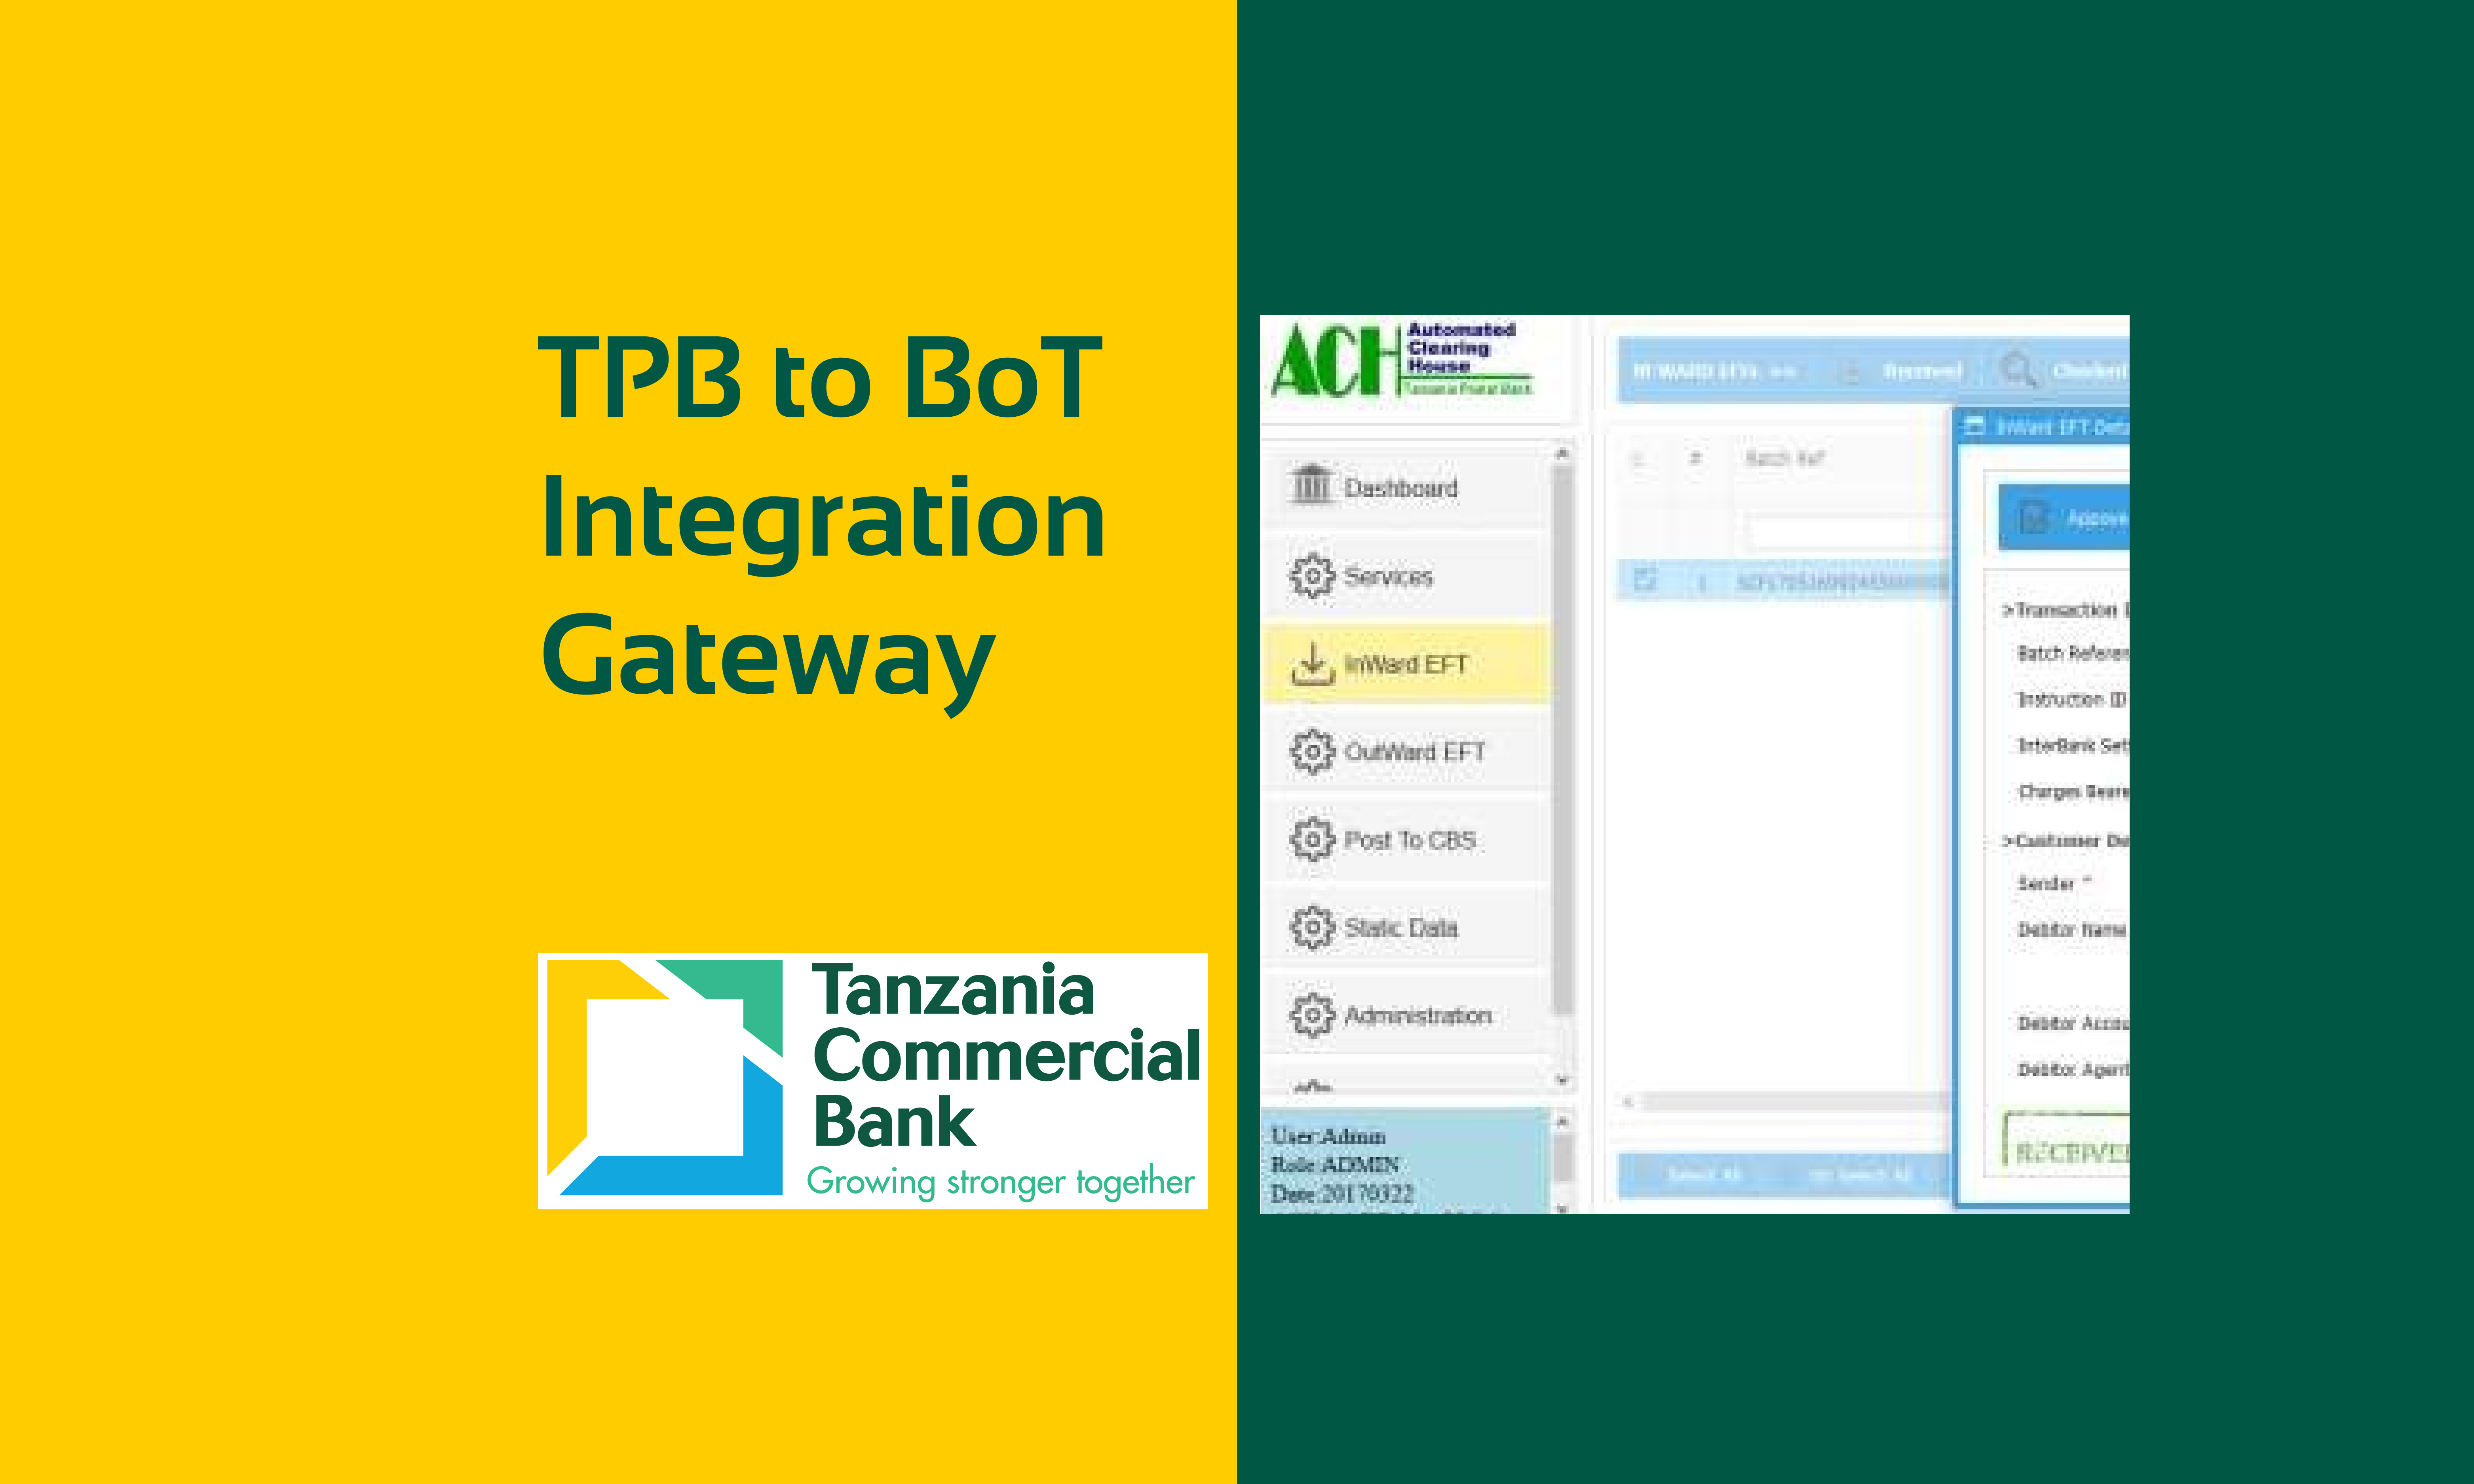 TPB to BoT Integration Gateway